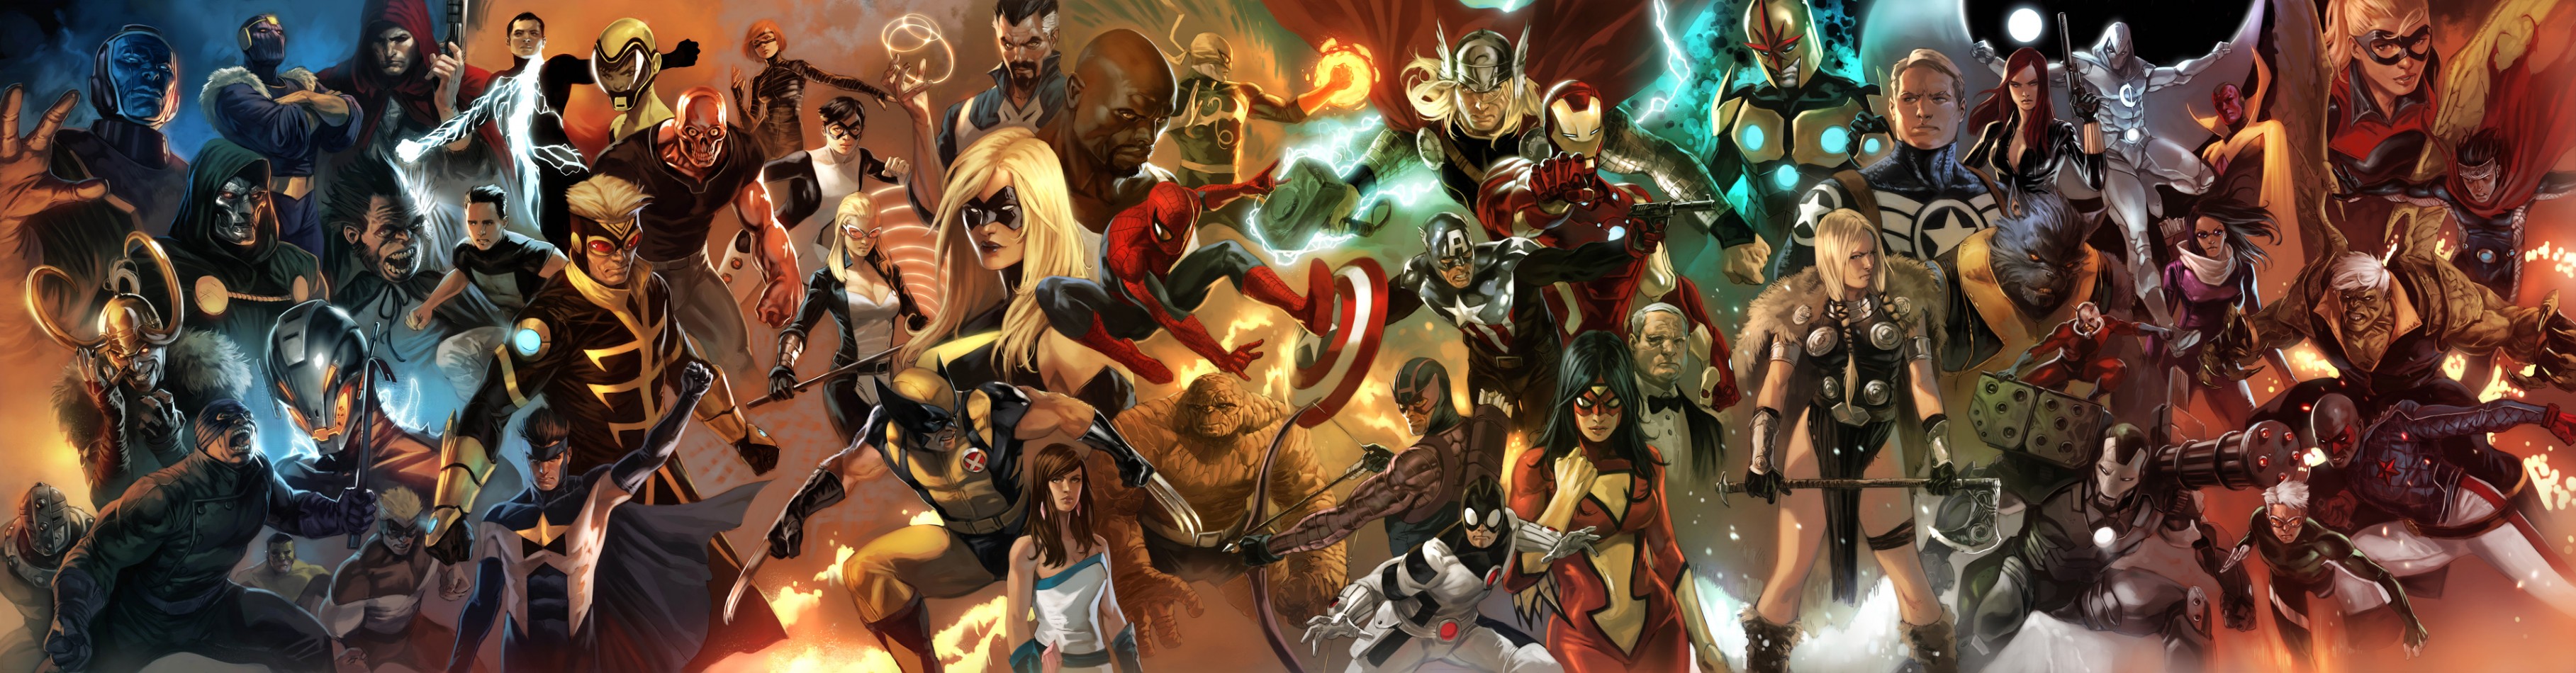 Sixmorevodka Avengers Poster Panorama Marvel Art By Marko